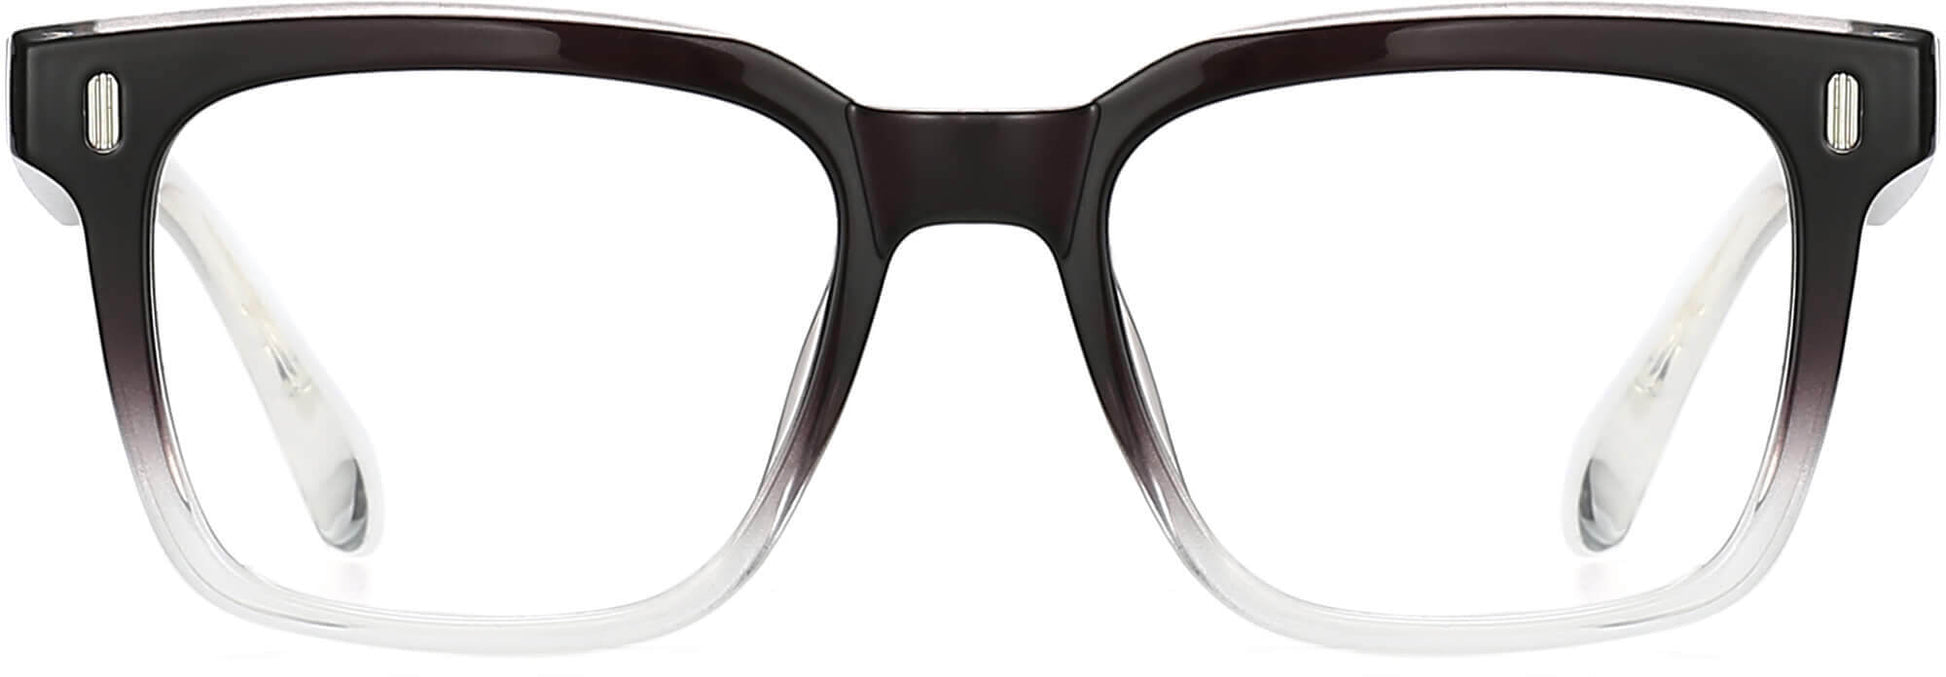 Solomon Square Black Eyeglasses from ANRRI, front view